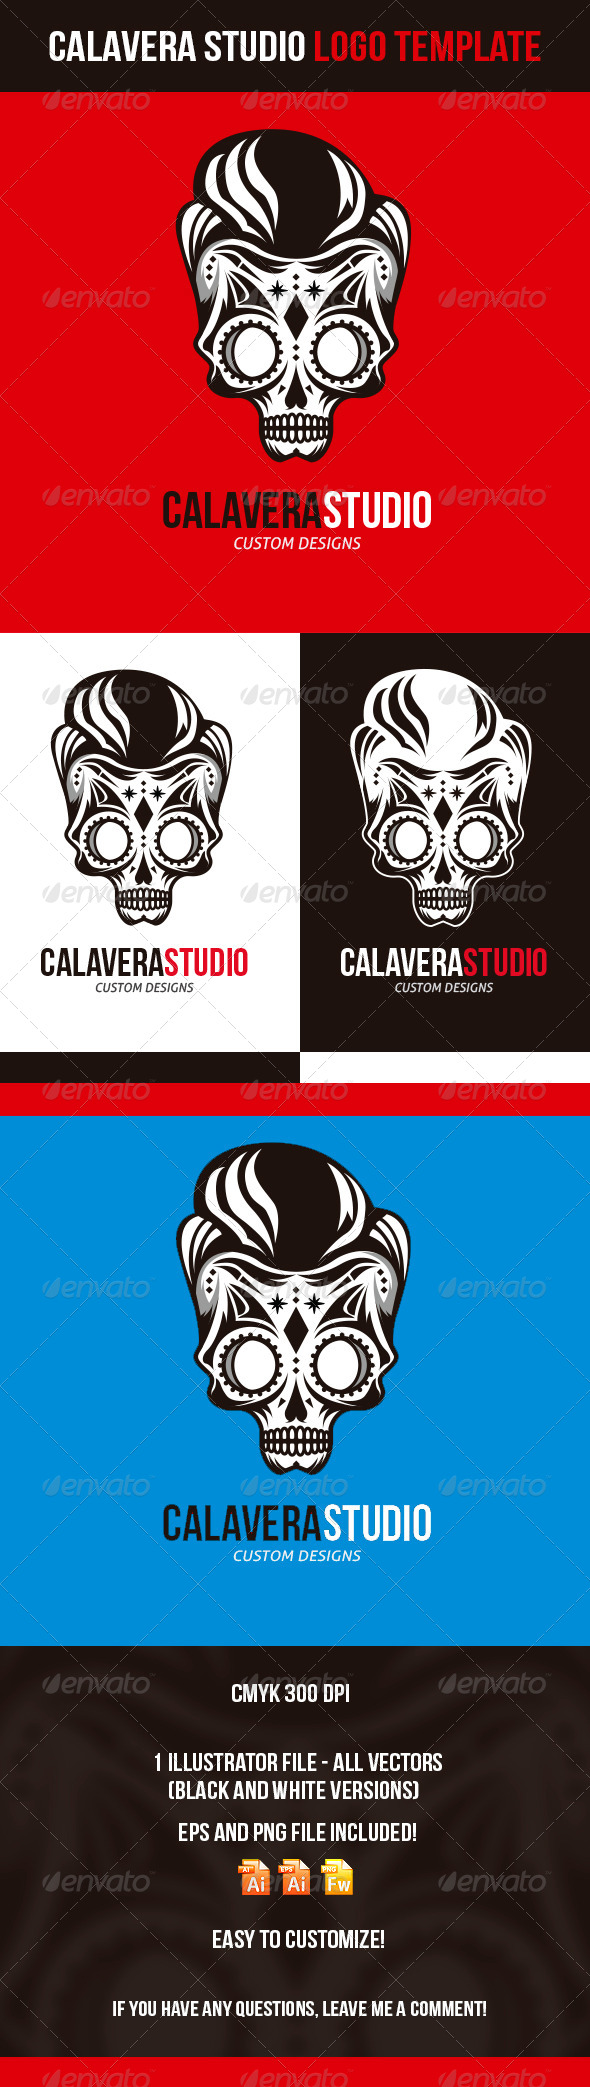 Calavera Studio Logo Template